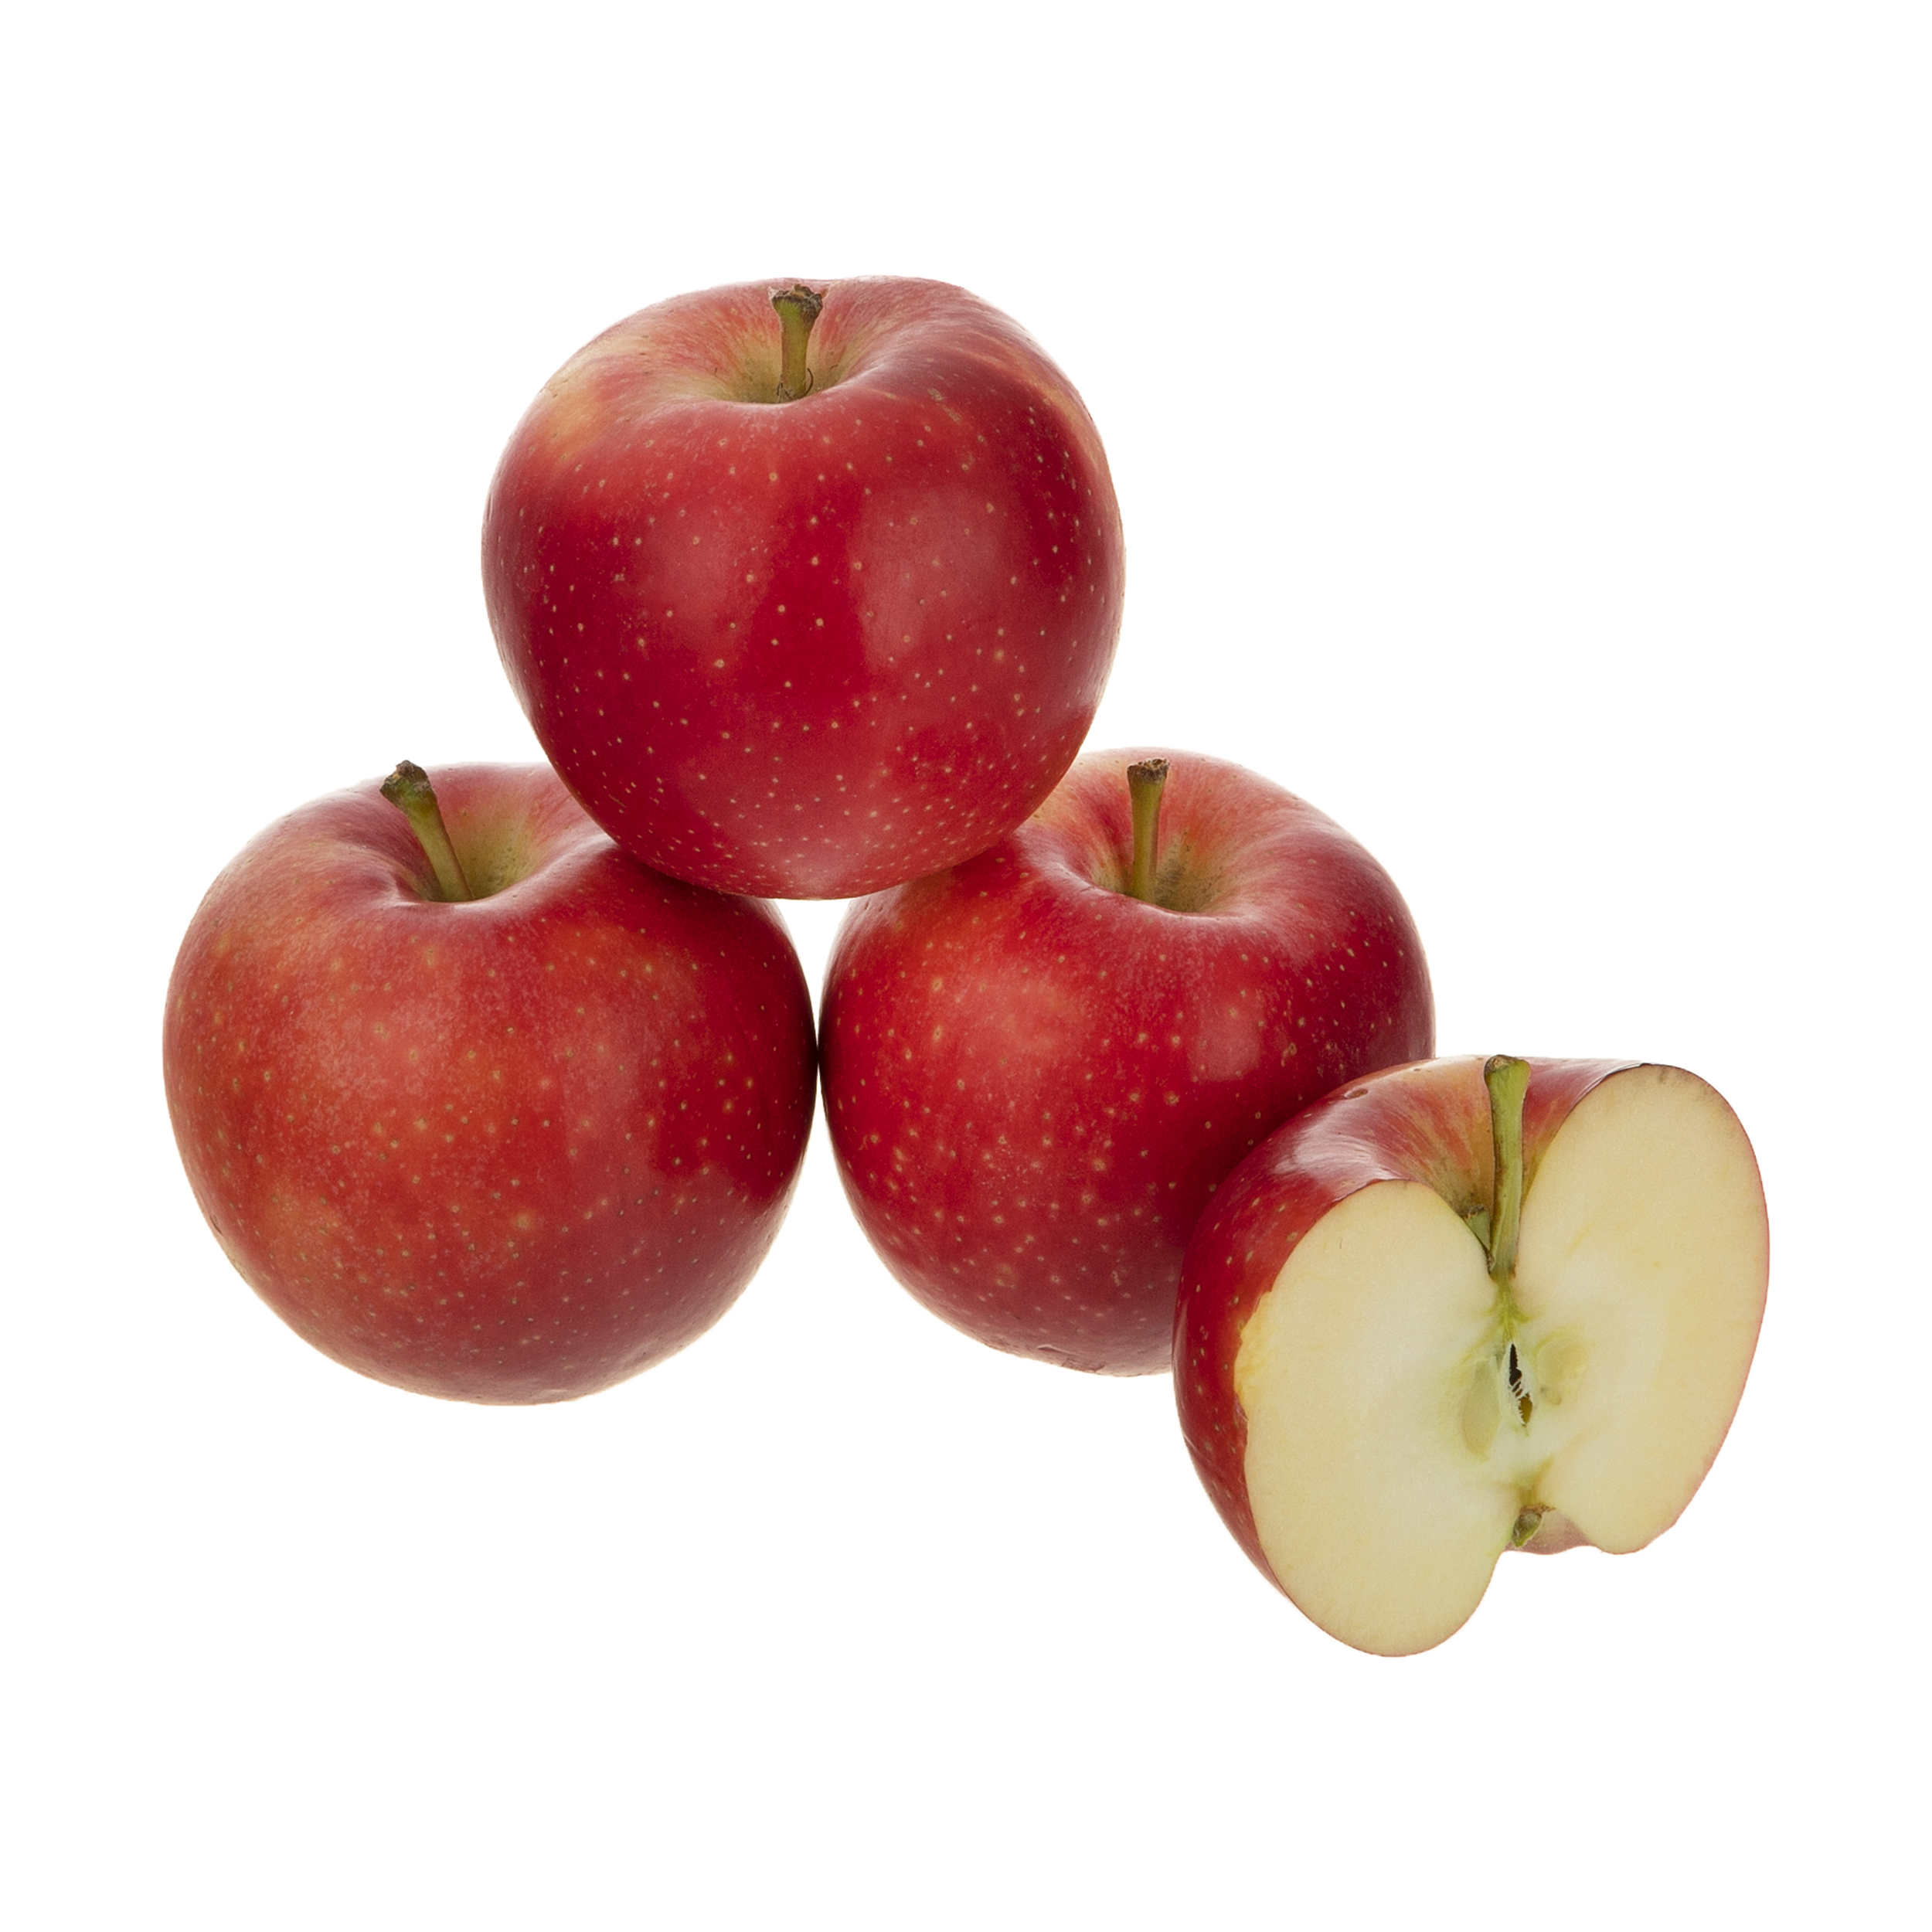 سیب قرمز میوه پلاس - 1 کیلوگرم